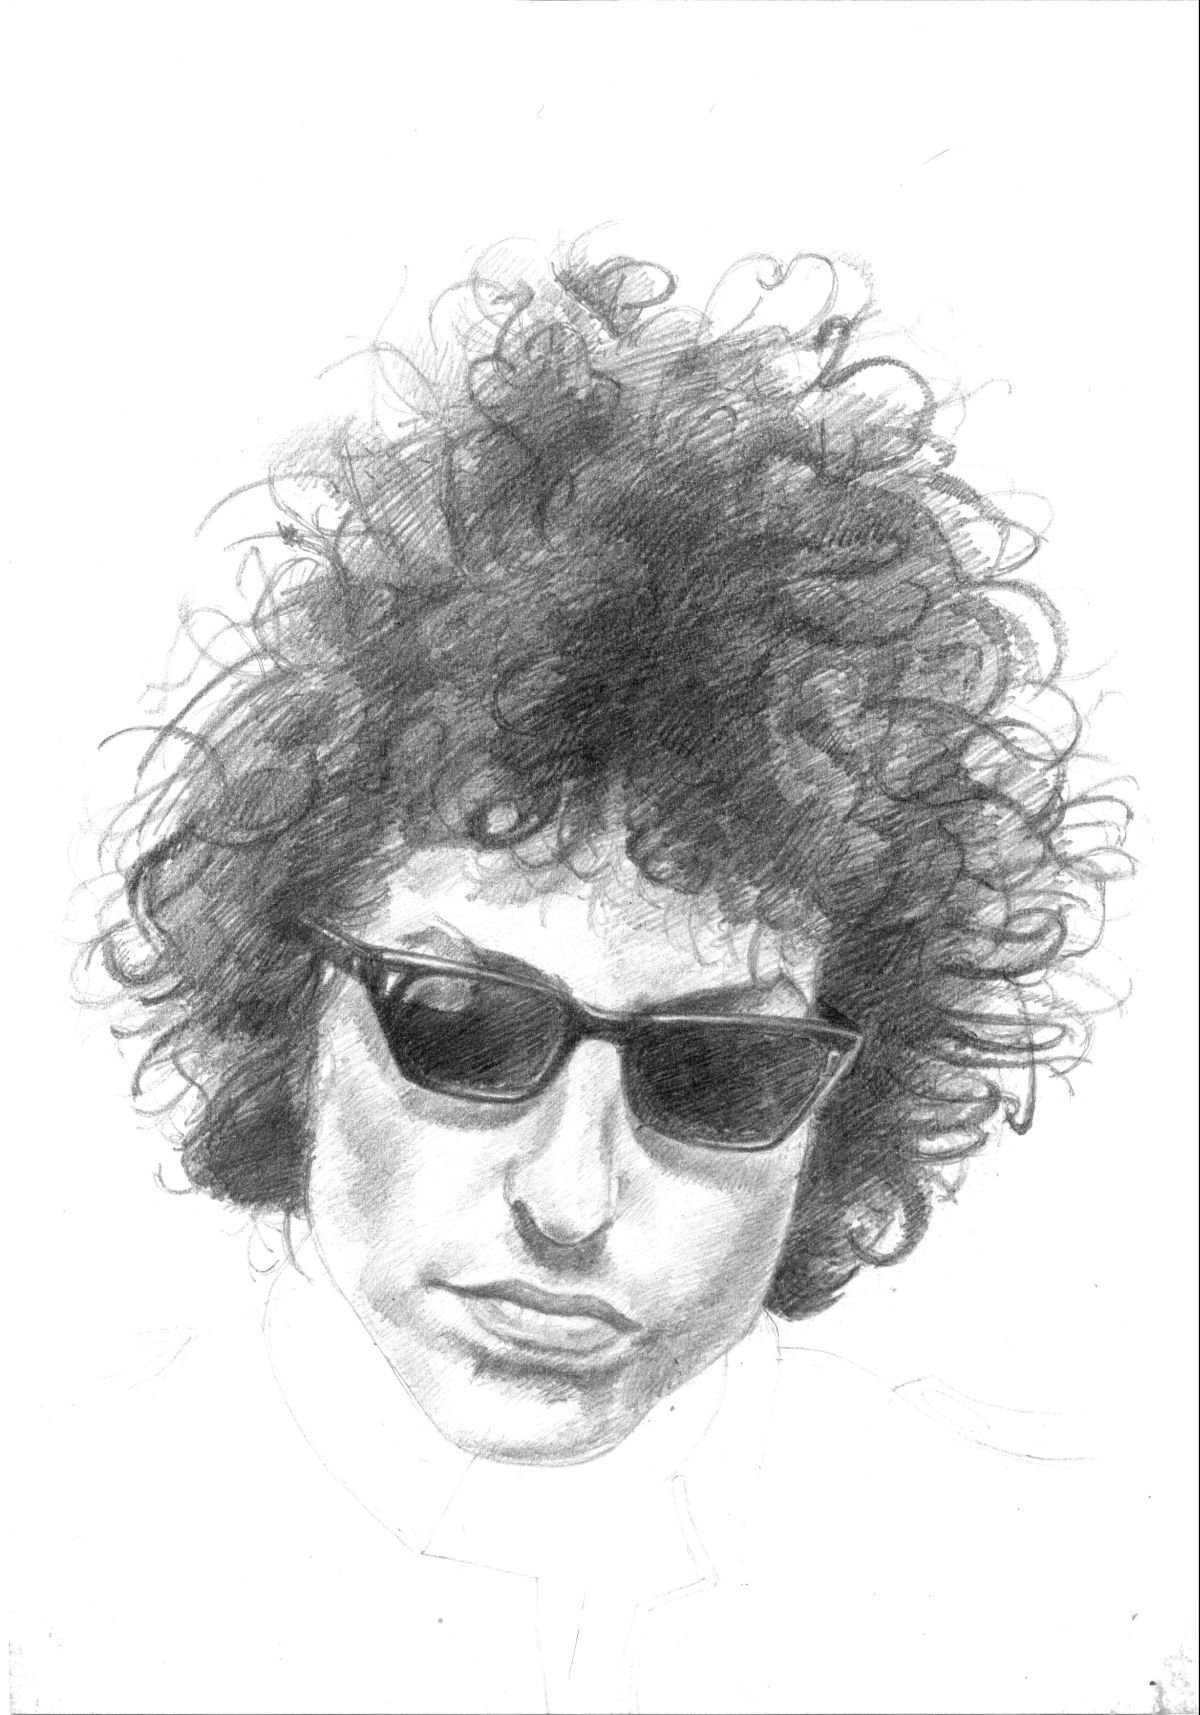 Bob Dylan Sketch at Explore collection of Bob